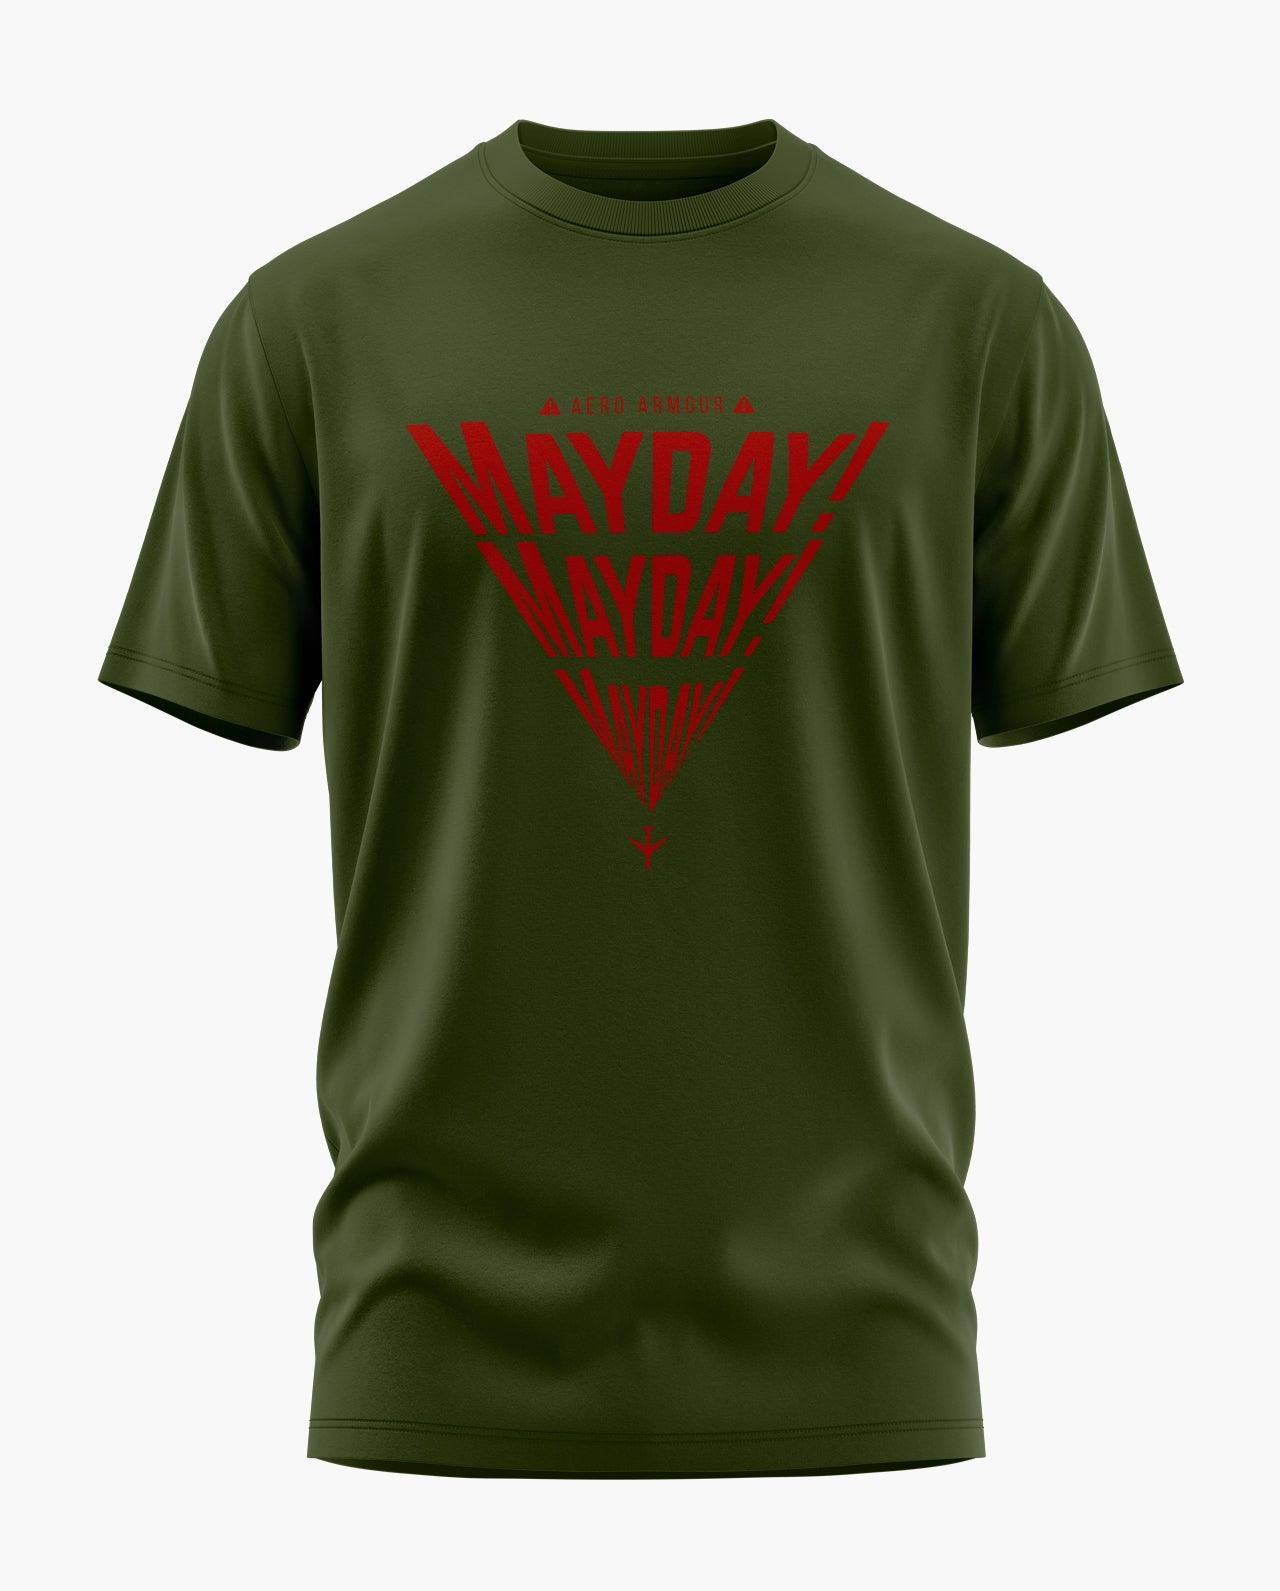 Mayday T-Shirt - Aero Armour